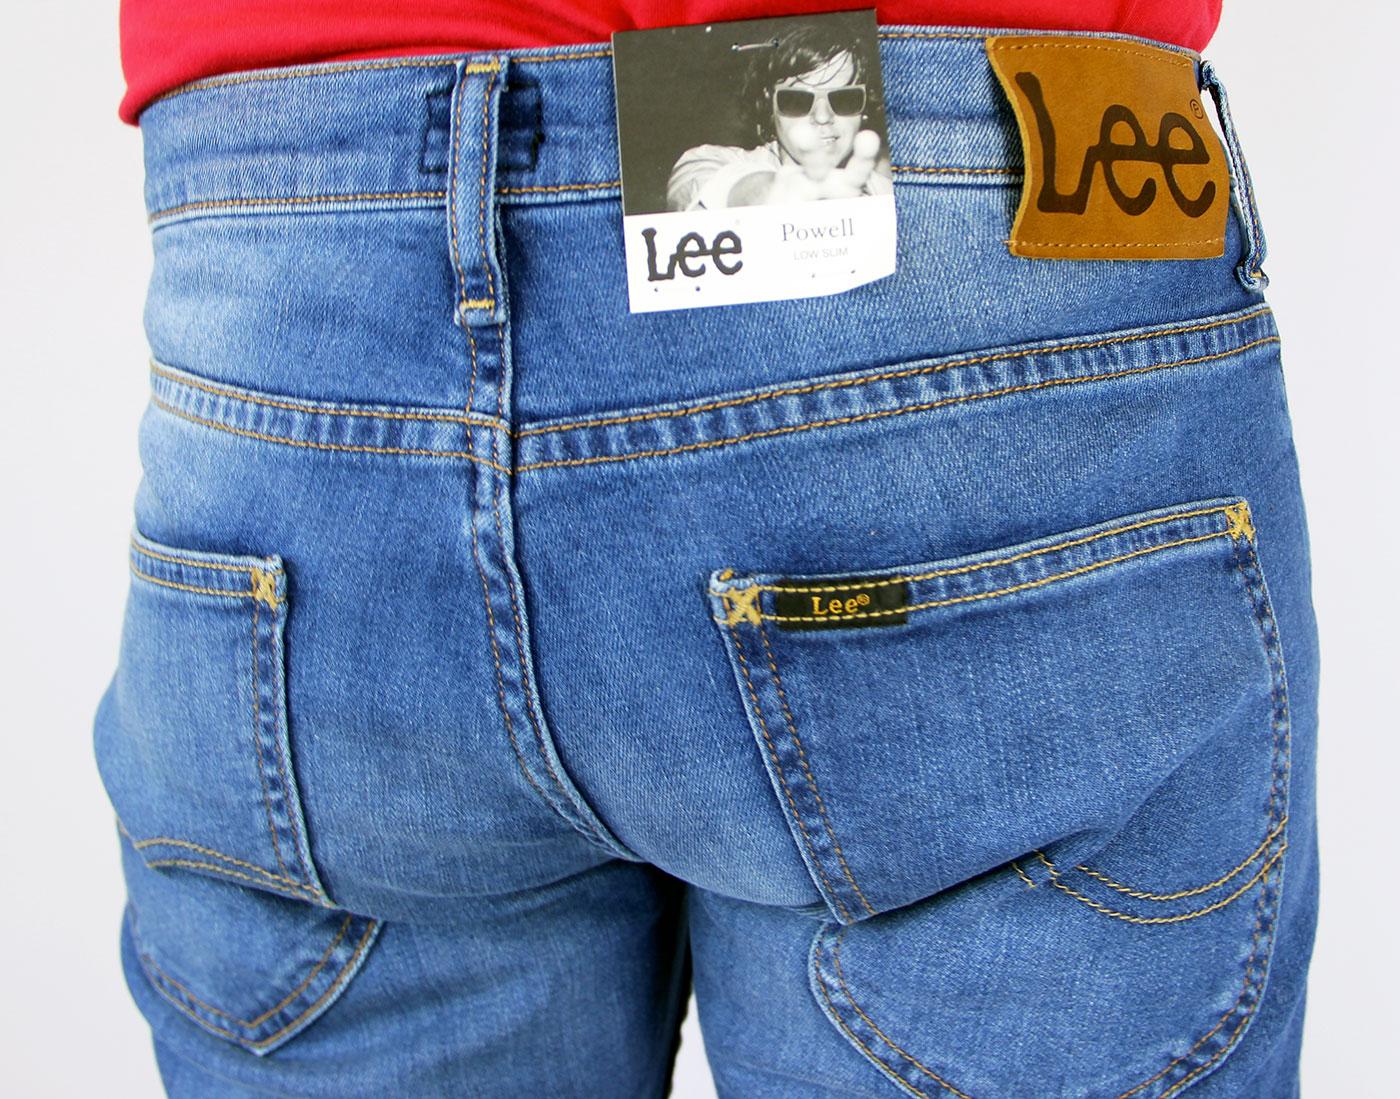 LEE JEANS Powell Retro Mod Low Slim Fit Jeans Blue Stream